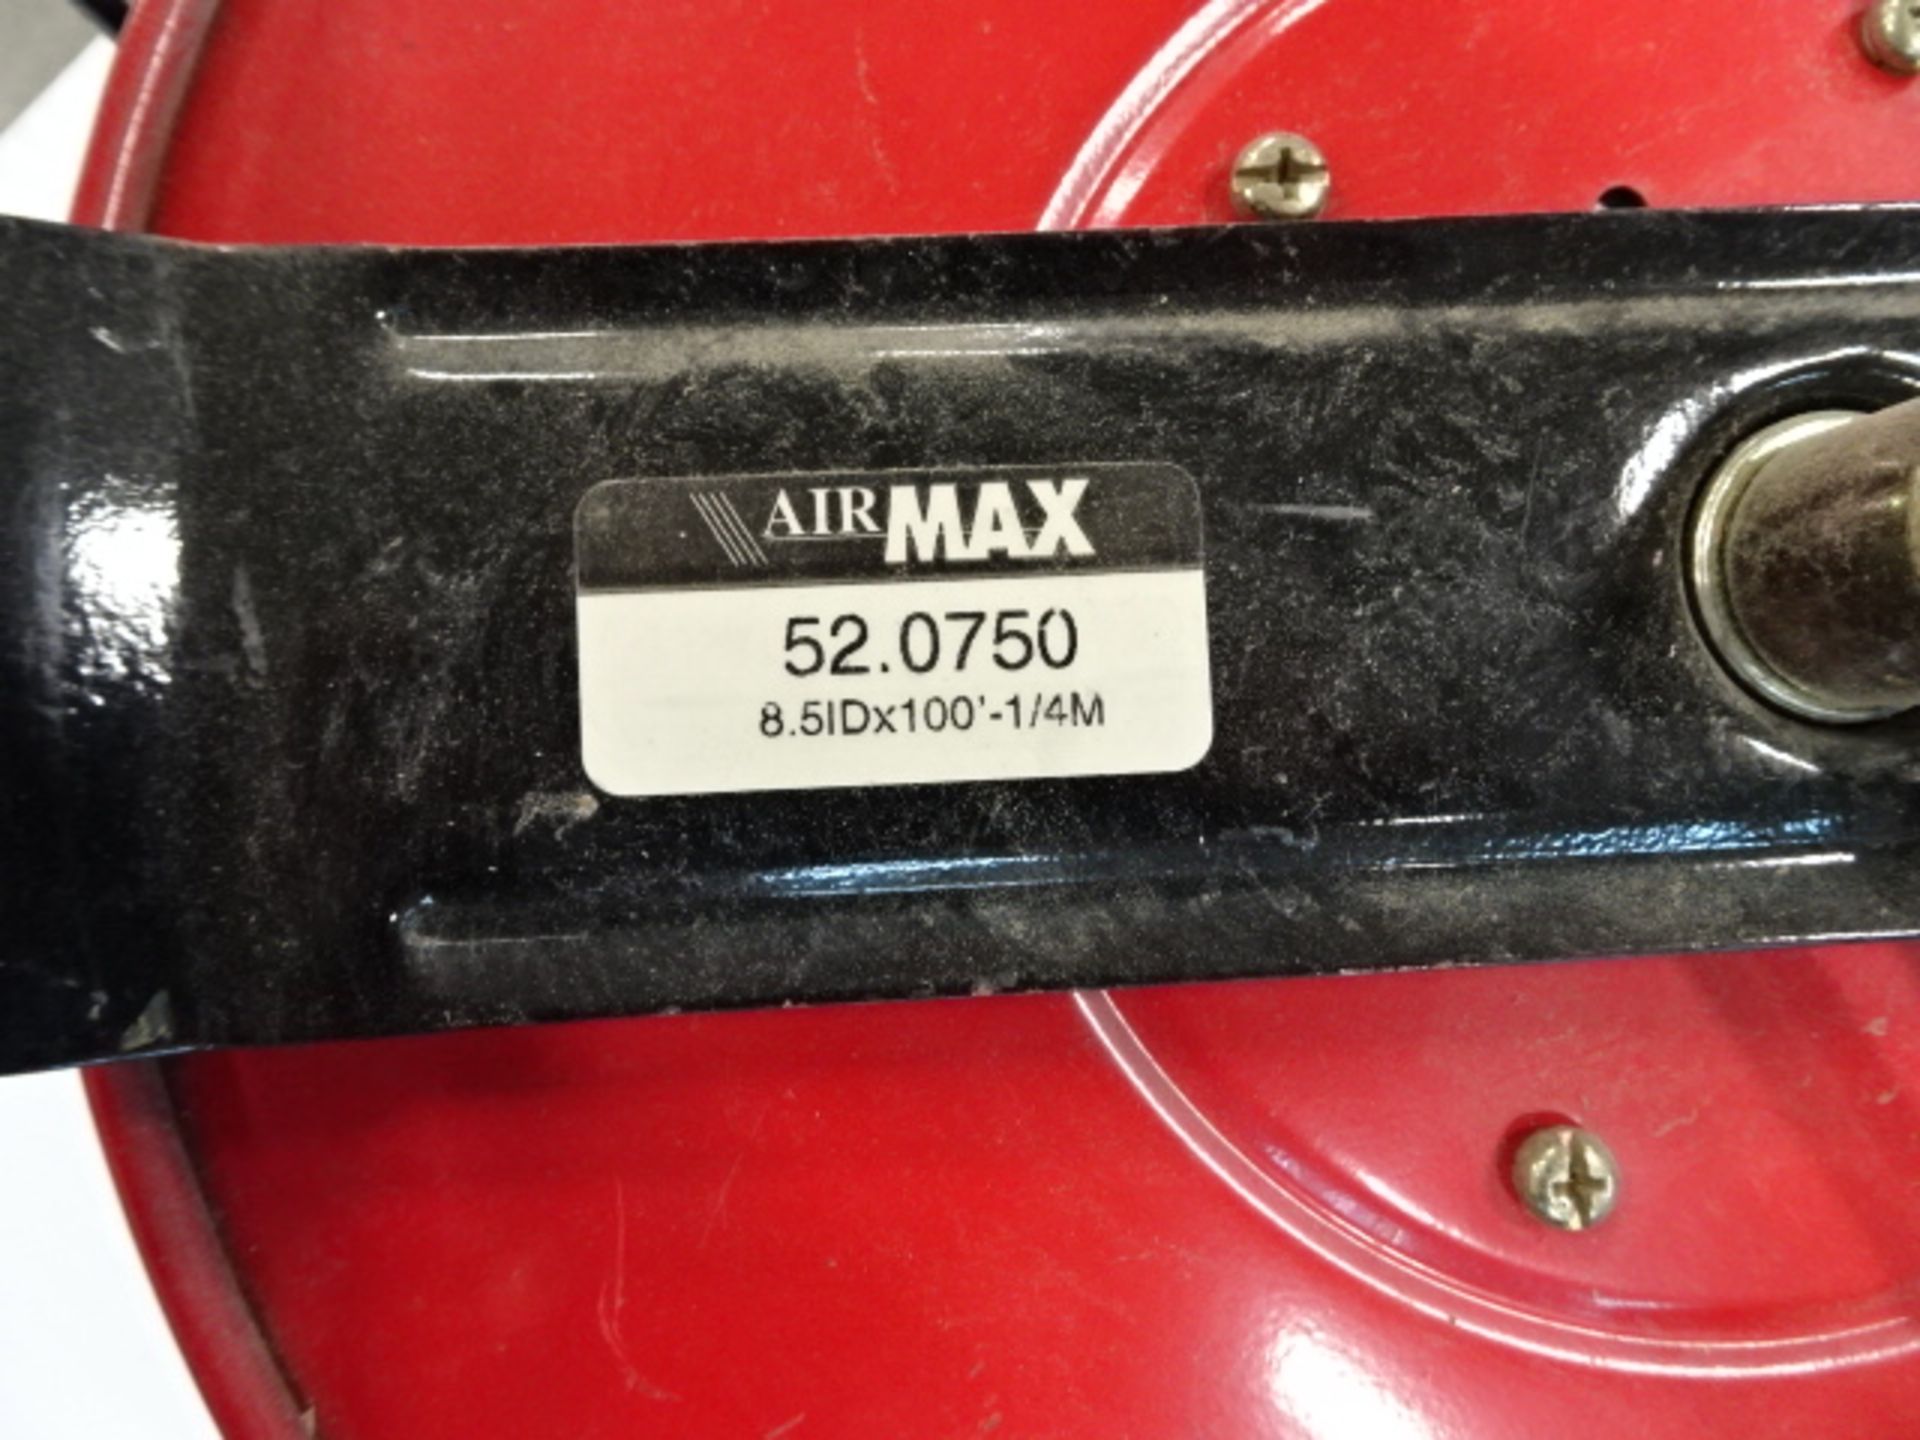 Compresseur d'air 2 h.p "Makita" 2 h.p compressor + hose & reel - Image 4 of 4